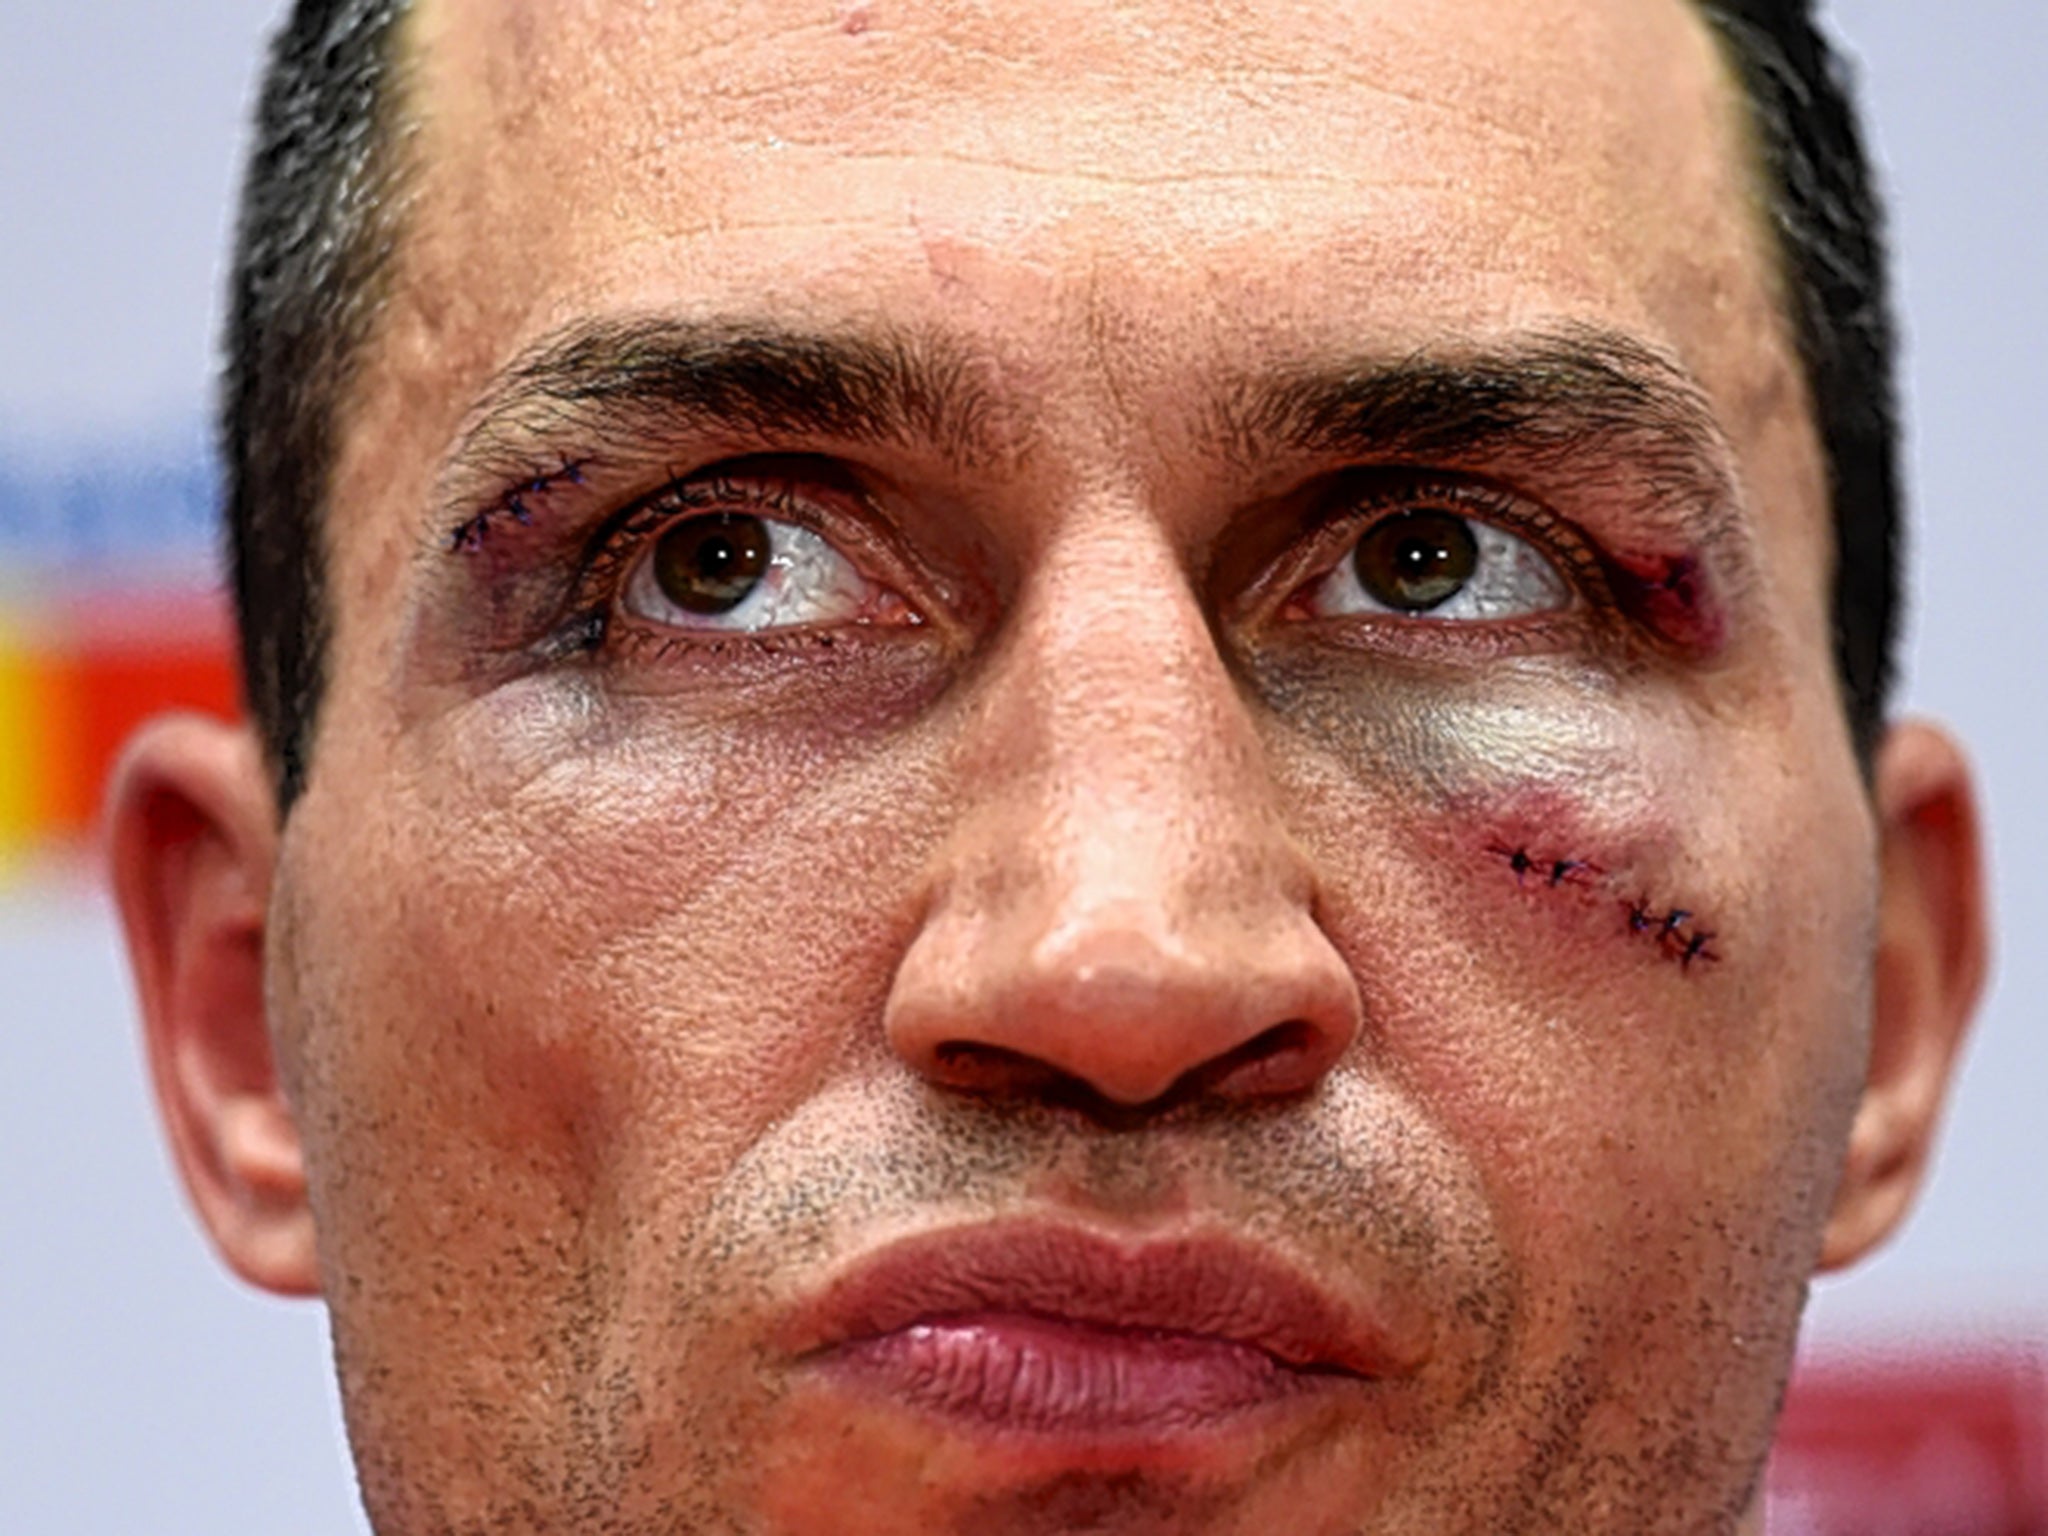 &#13;
Wladimir Klitschko was left cut, bruised and baffled &#13;